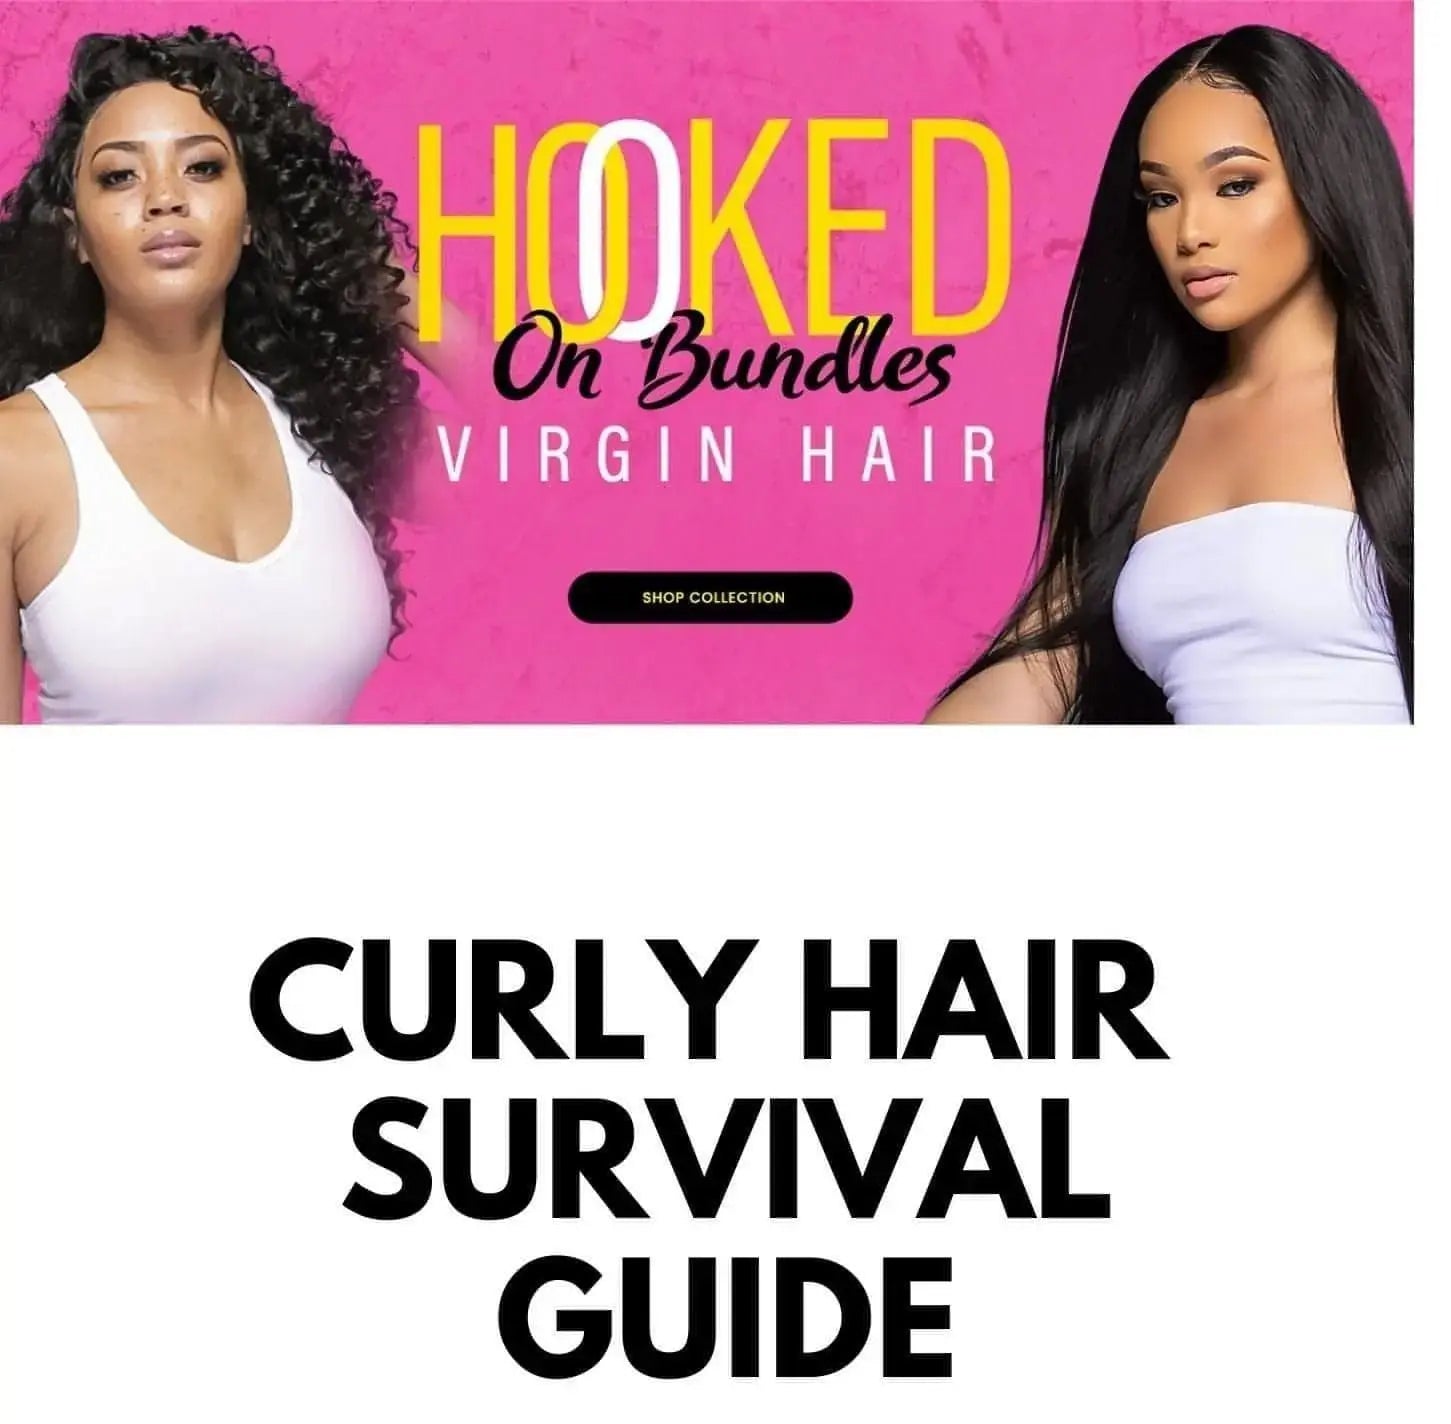 The Curly Hair Survival Guide-Free Download! - HookedOnBundles Virgin Hair